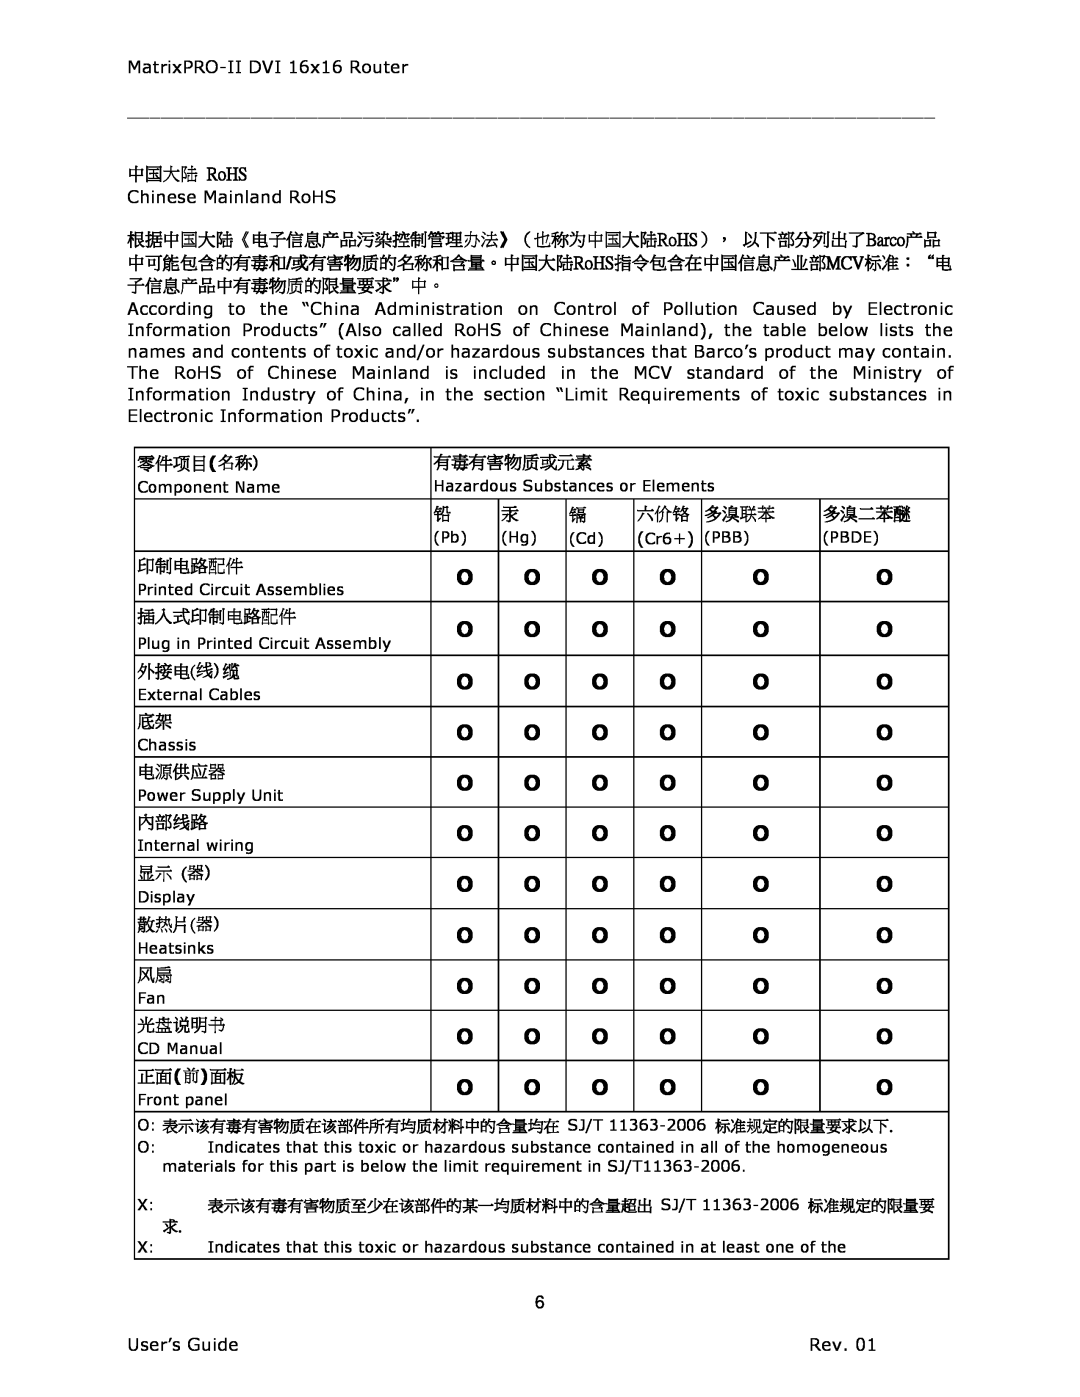 Barco 26-1302001-00 manual 中国大陆 RoHS 